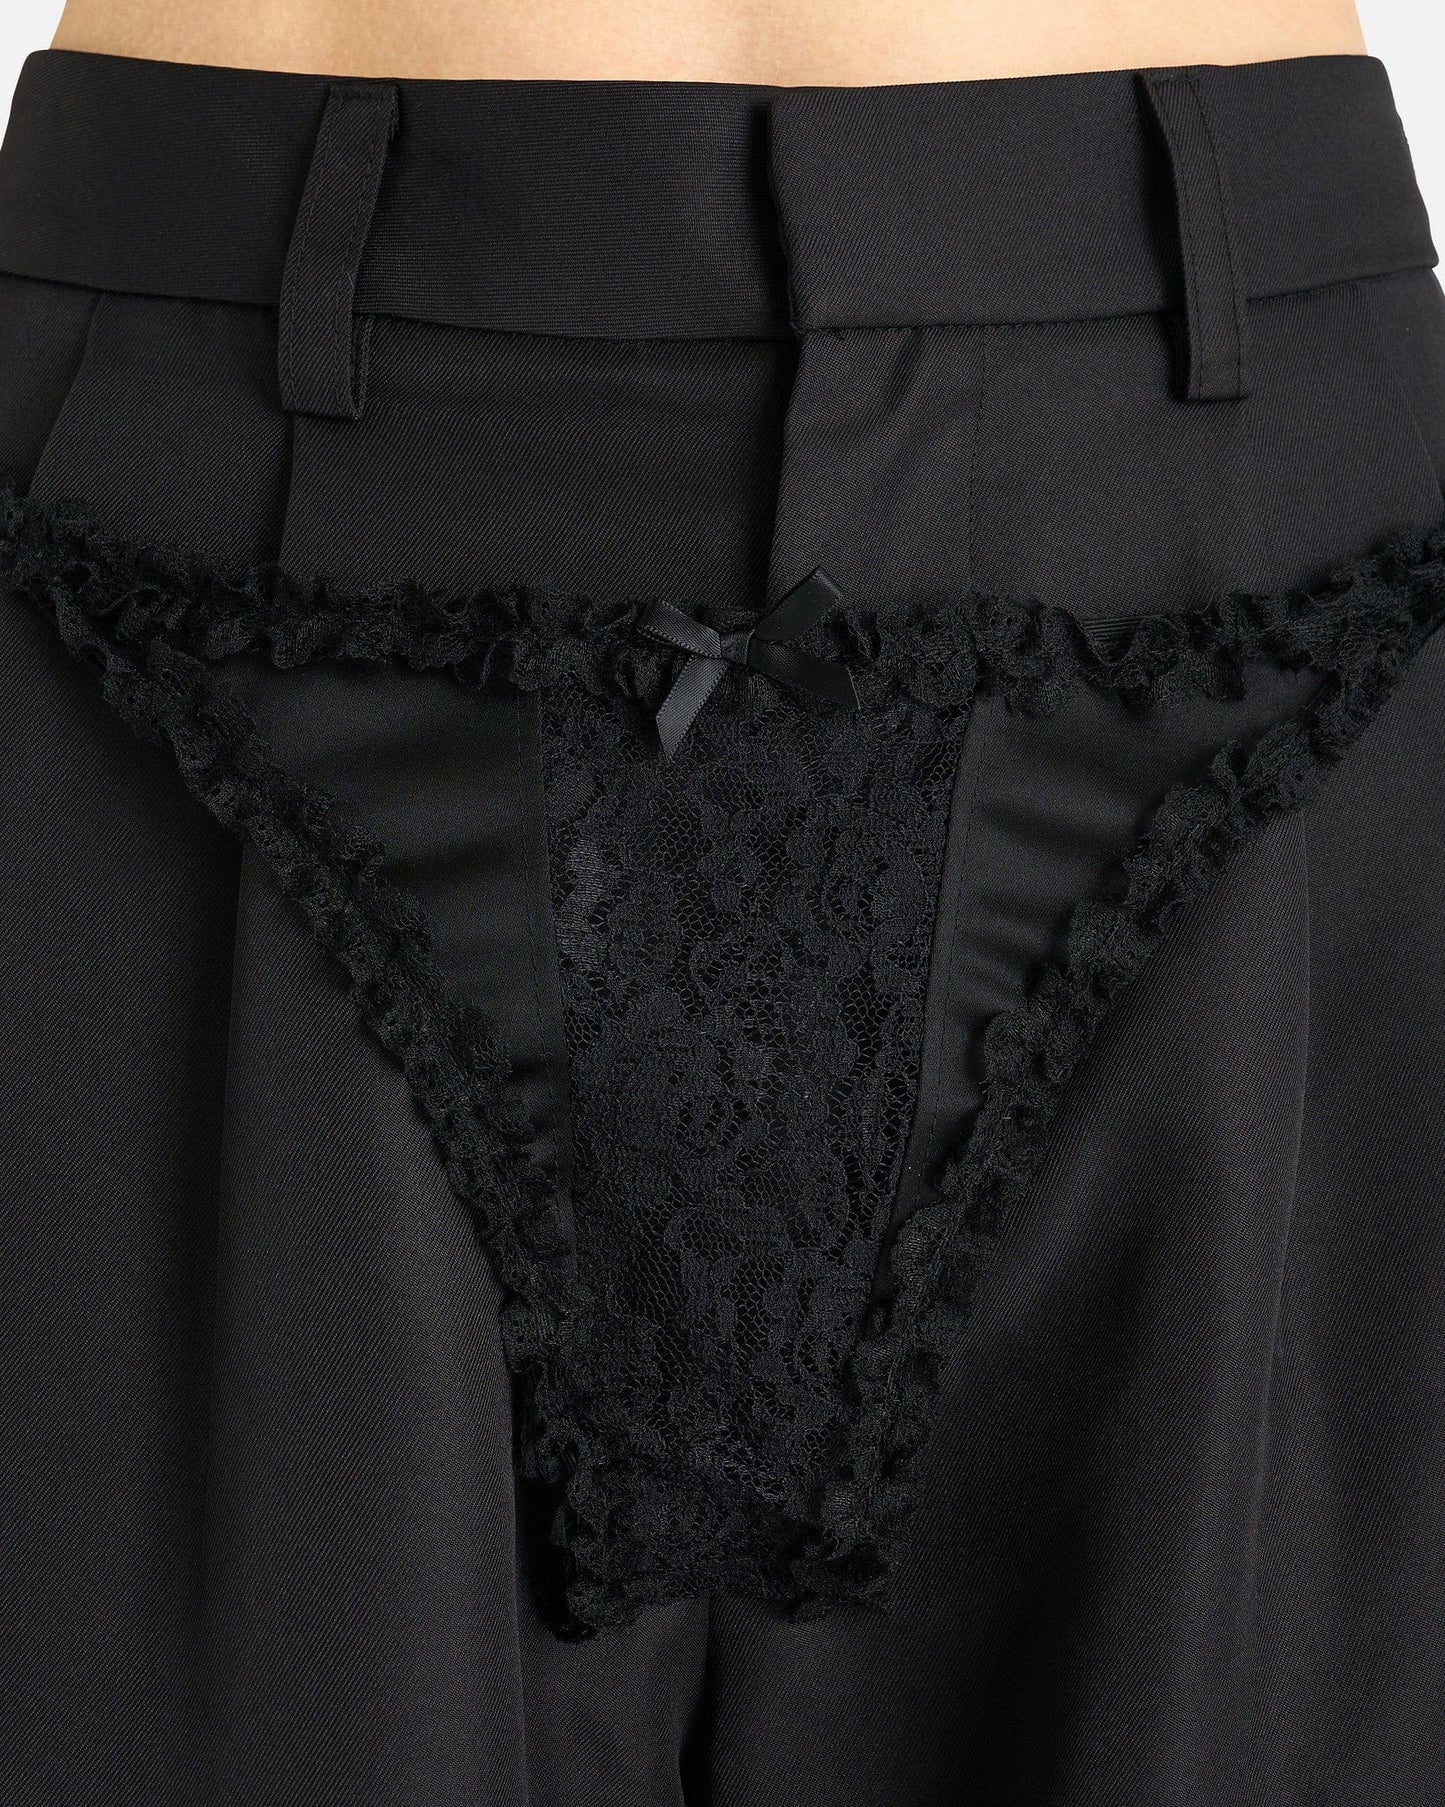 Vaquera Women Pants Underwear Woven Slacks in Black